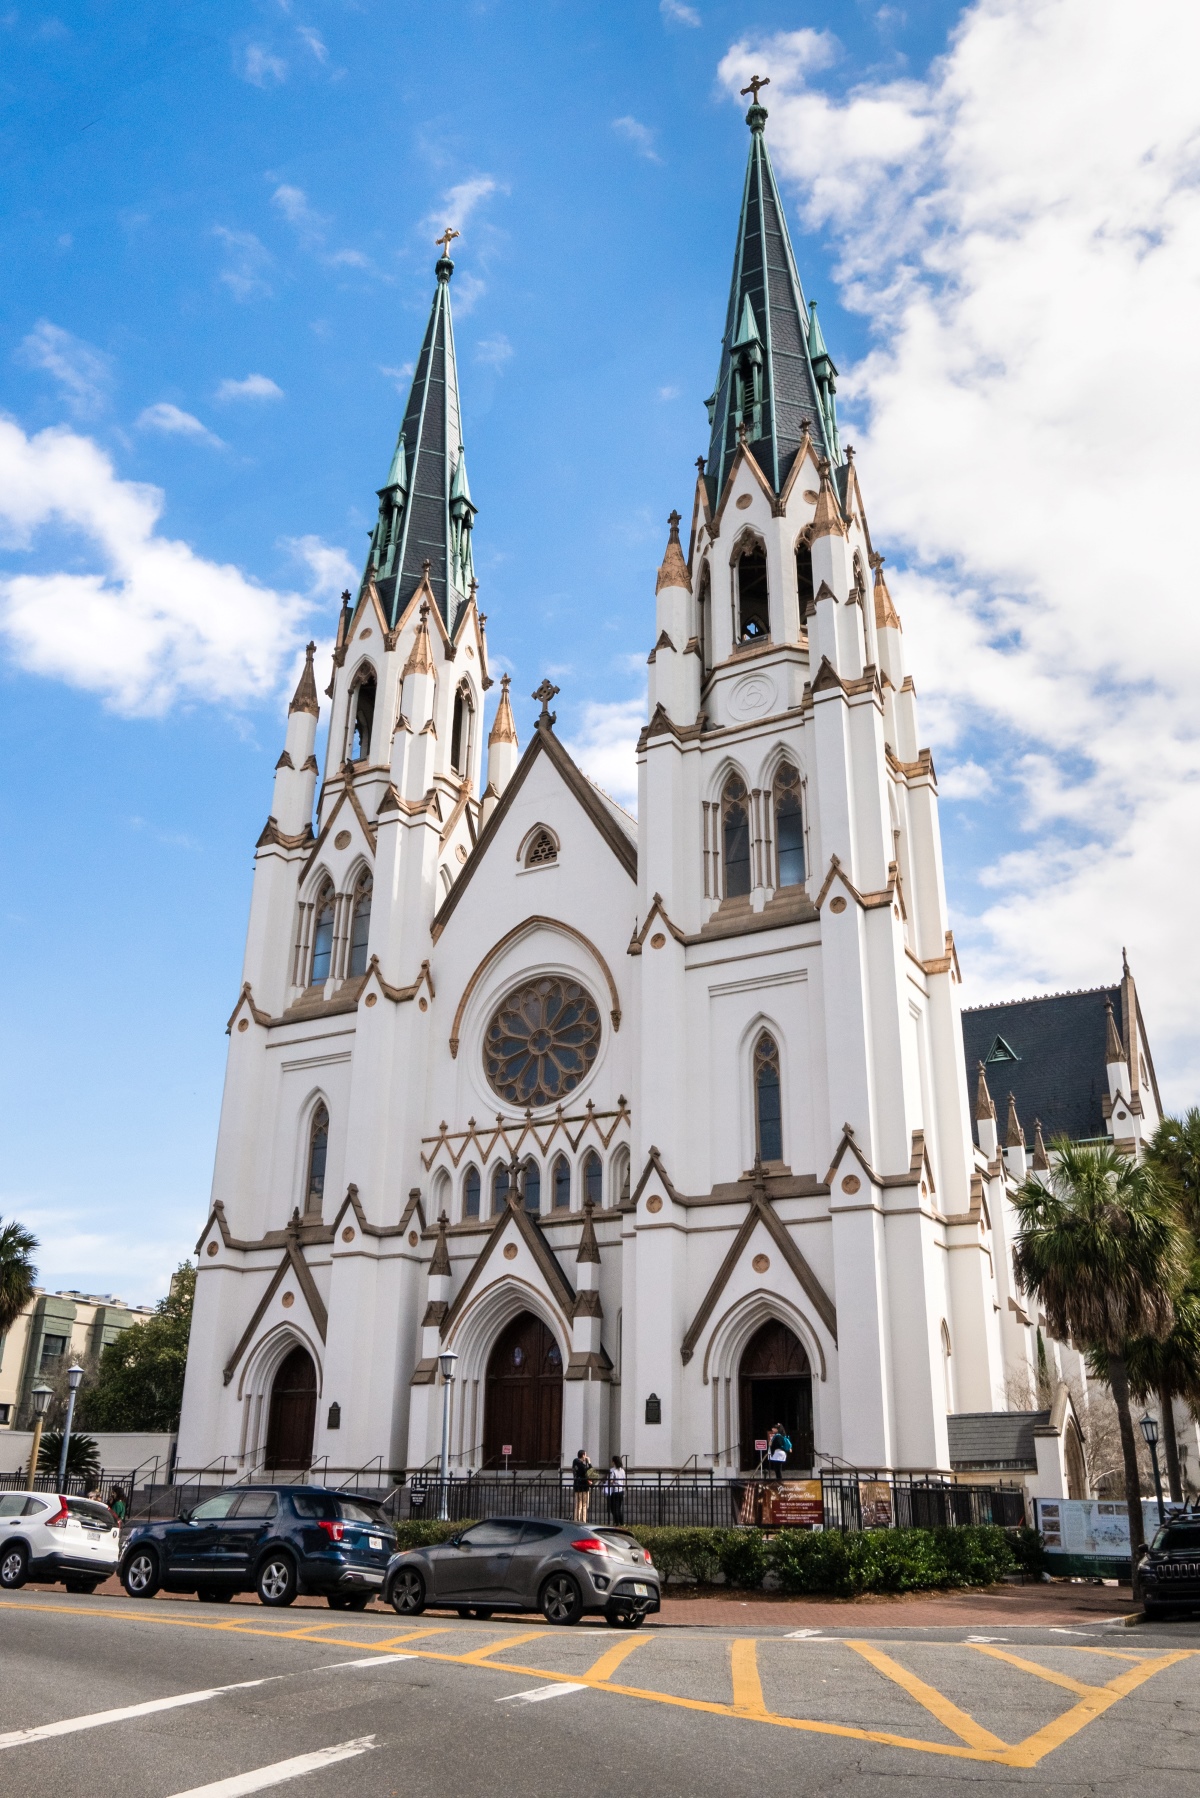  Cathedral of St. John the Baptist Savannah